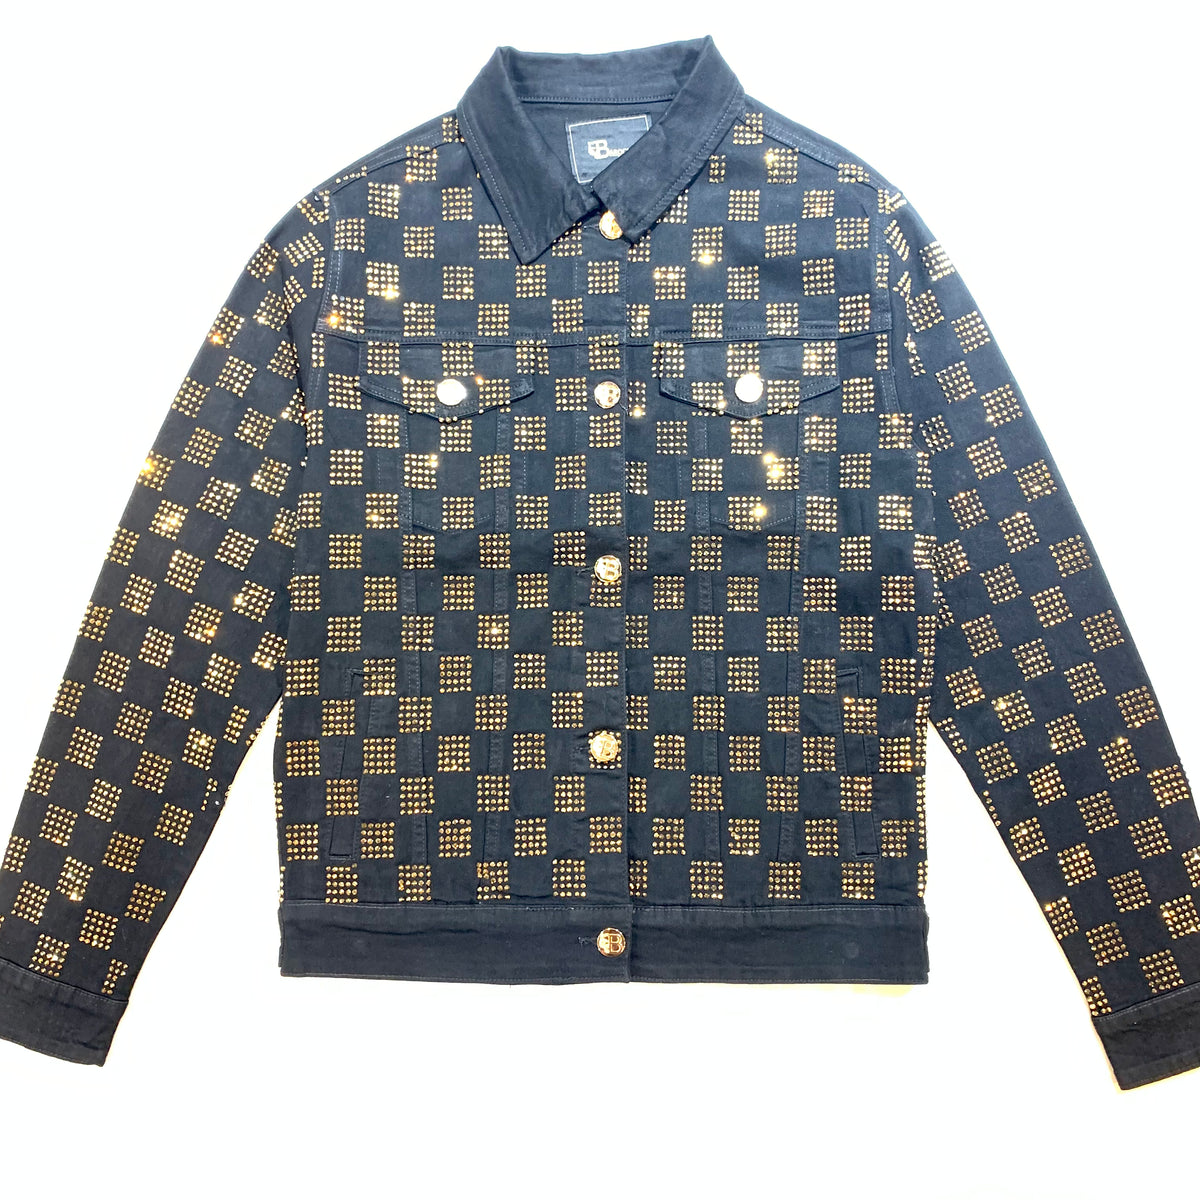 Barocco Black Gold Full Crystal Jacket - Dudes Boutique